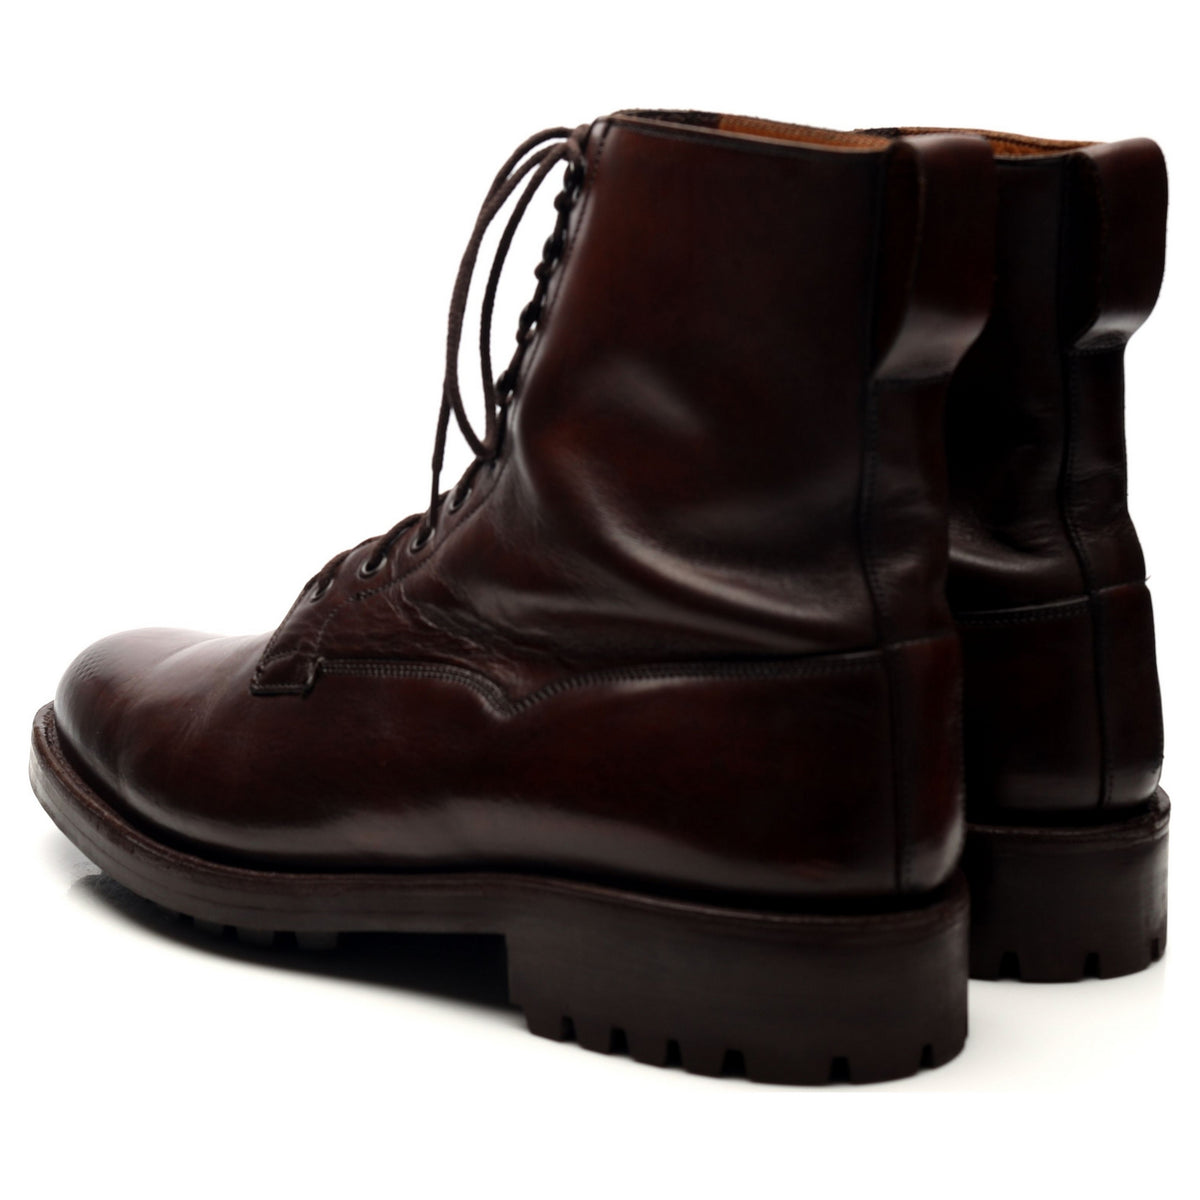 &#39;Snowdon&#39; Dark Brown Leather Veldtschoen Boots UK 11.5 E